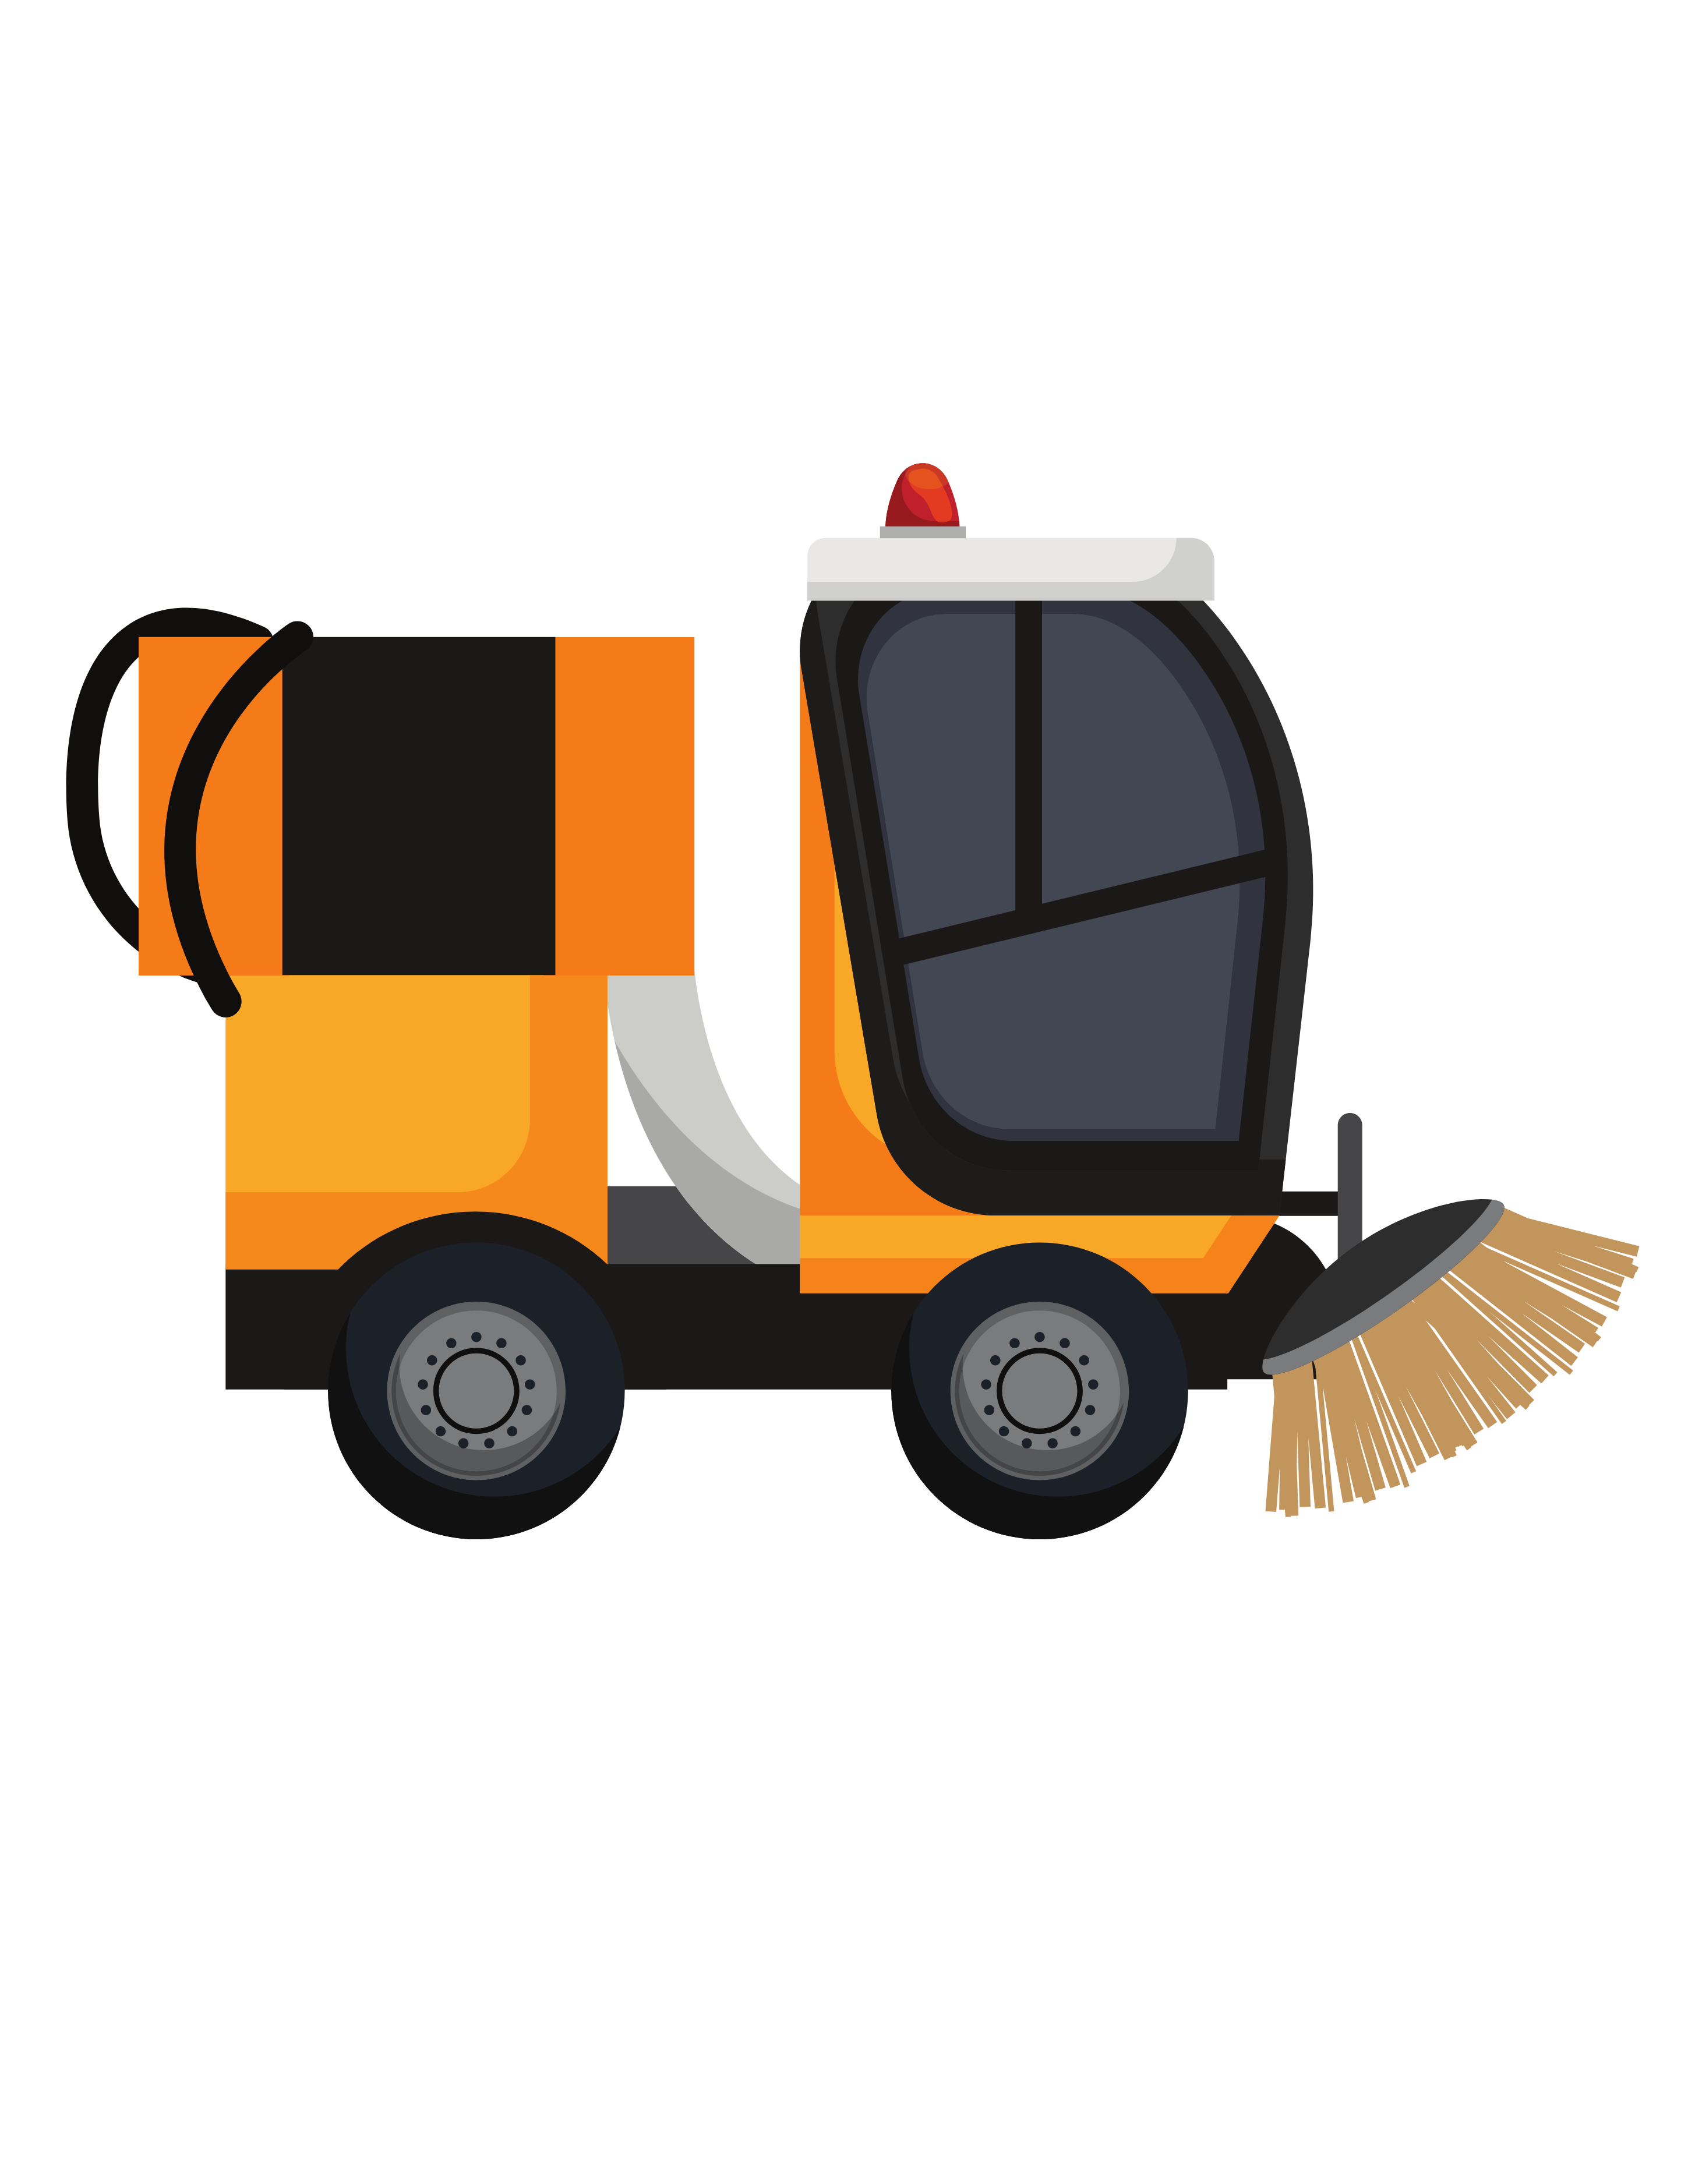 street sweeper